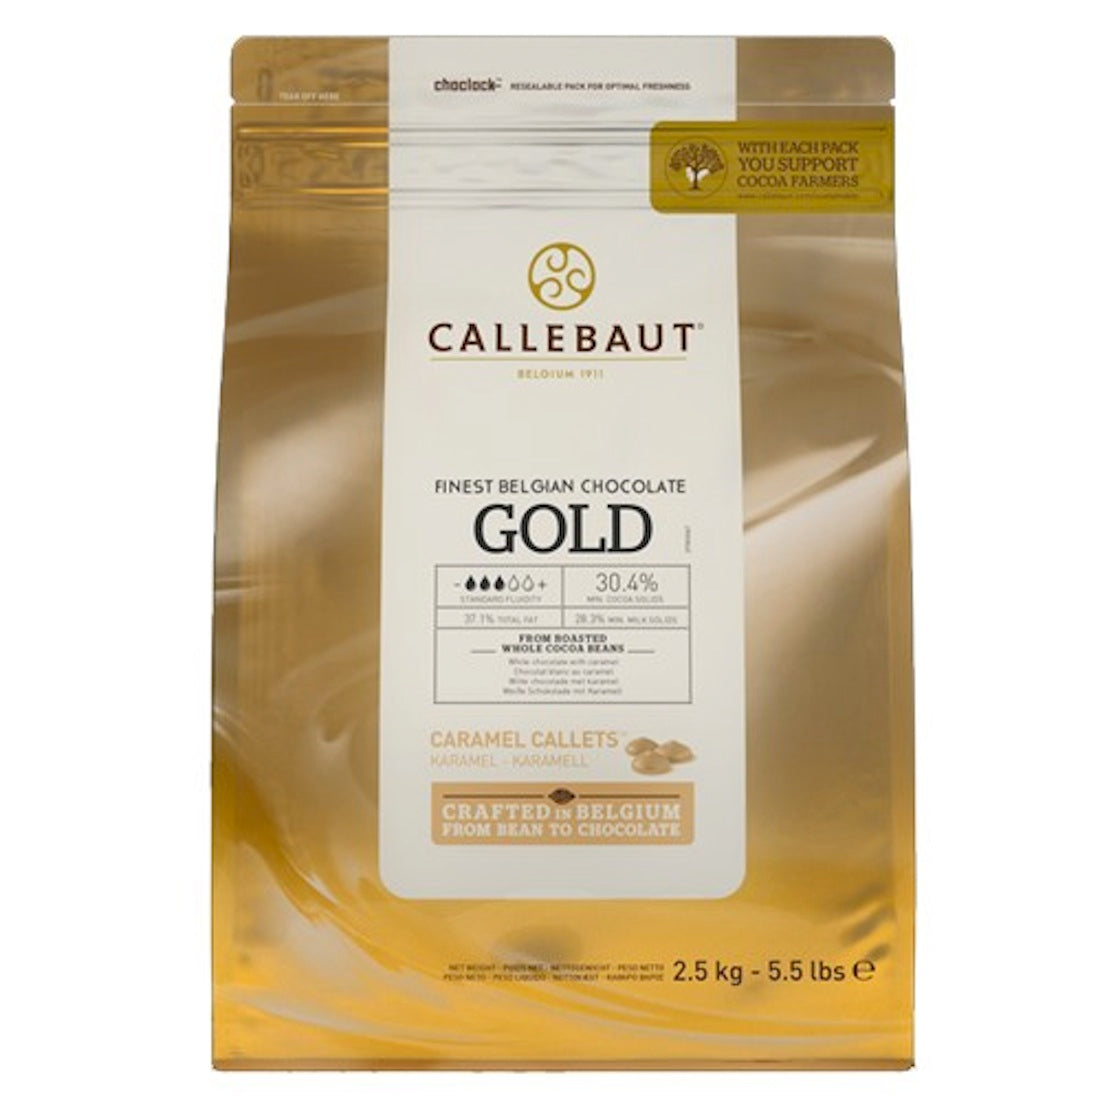 Callebaut Gold White Chocolate With Caramel Taste Callets Callebaut Chocolate Melts - Bake Supply Plus